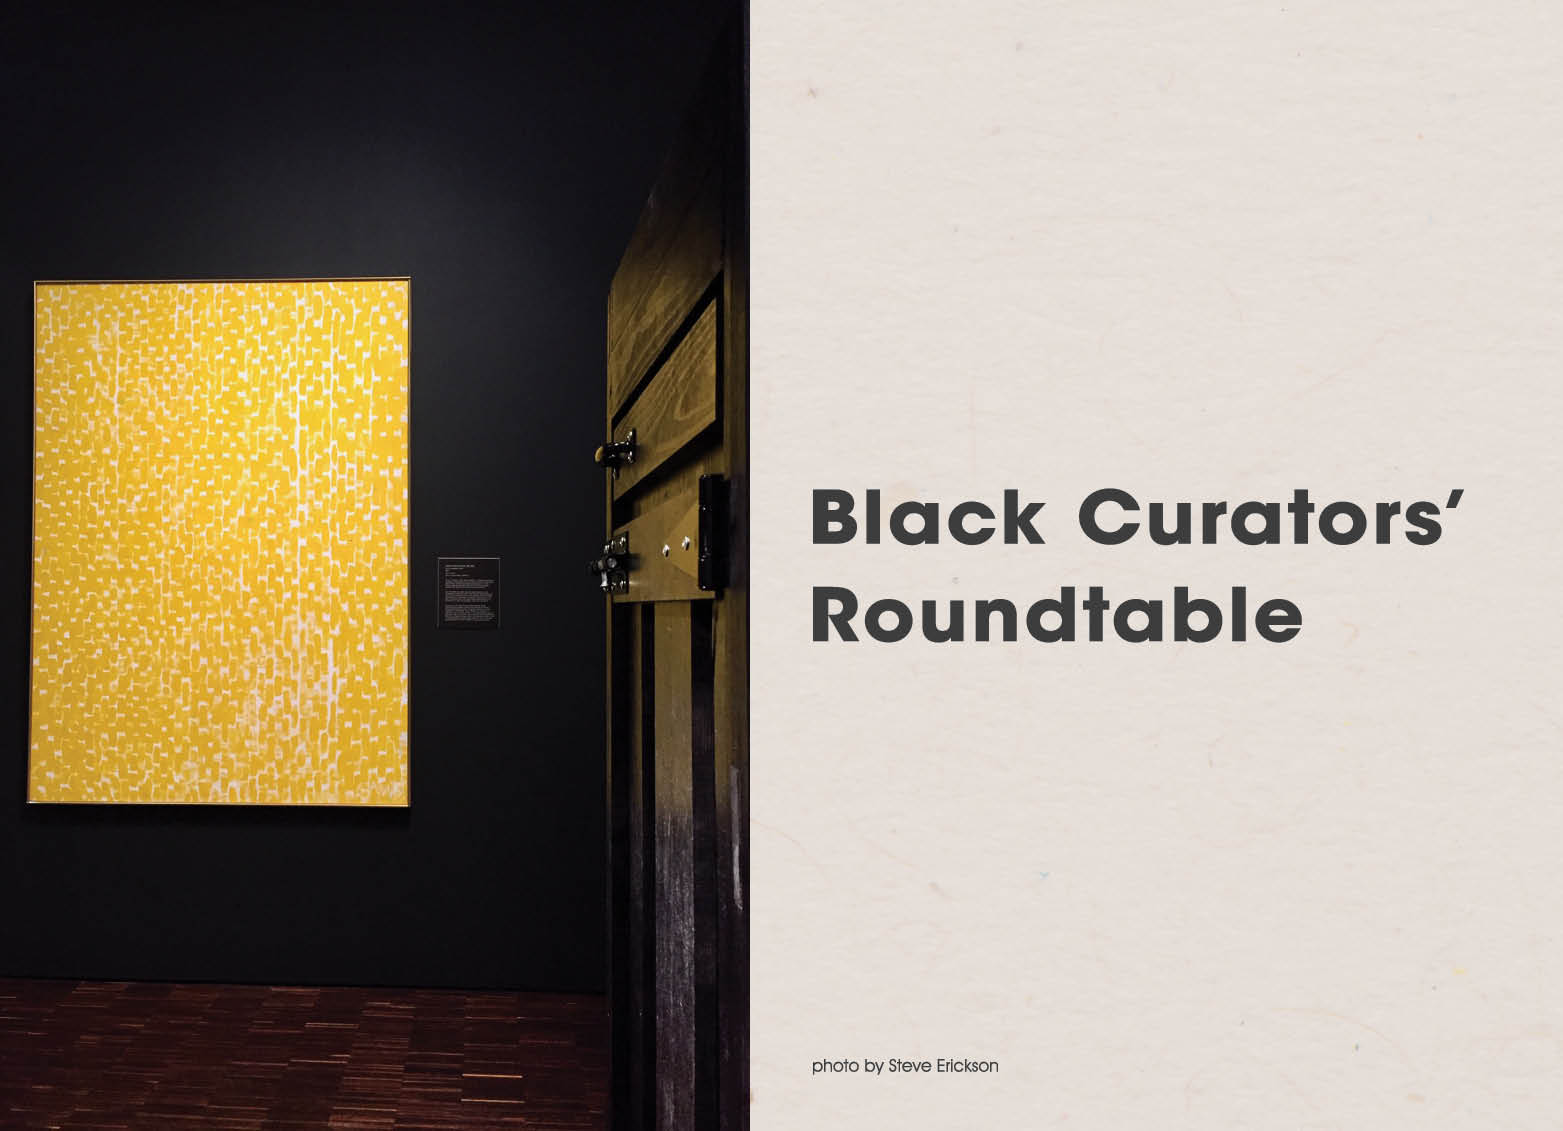 Black Curators' Roundtable